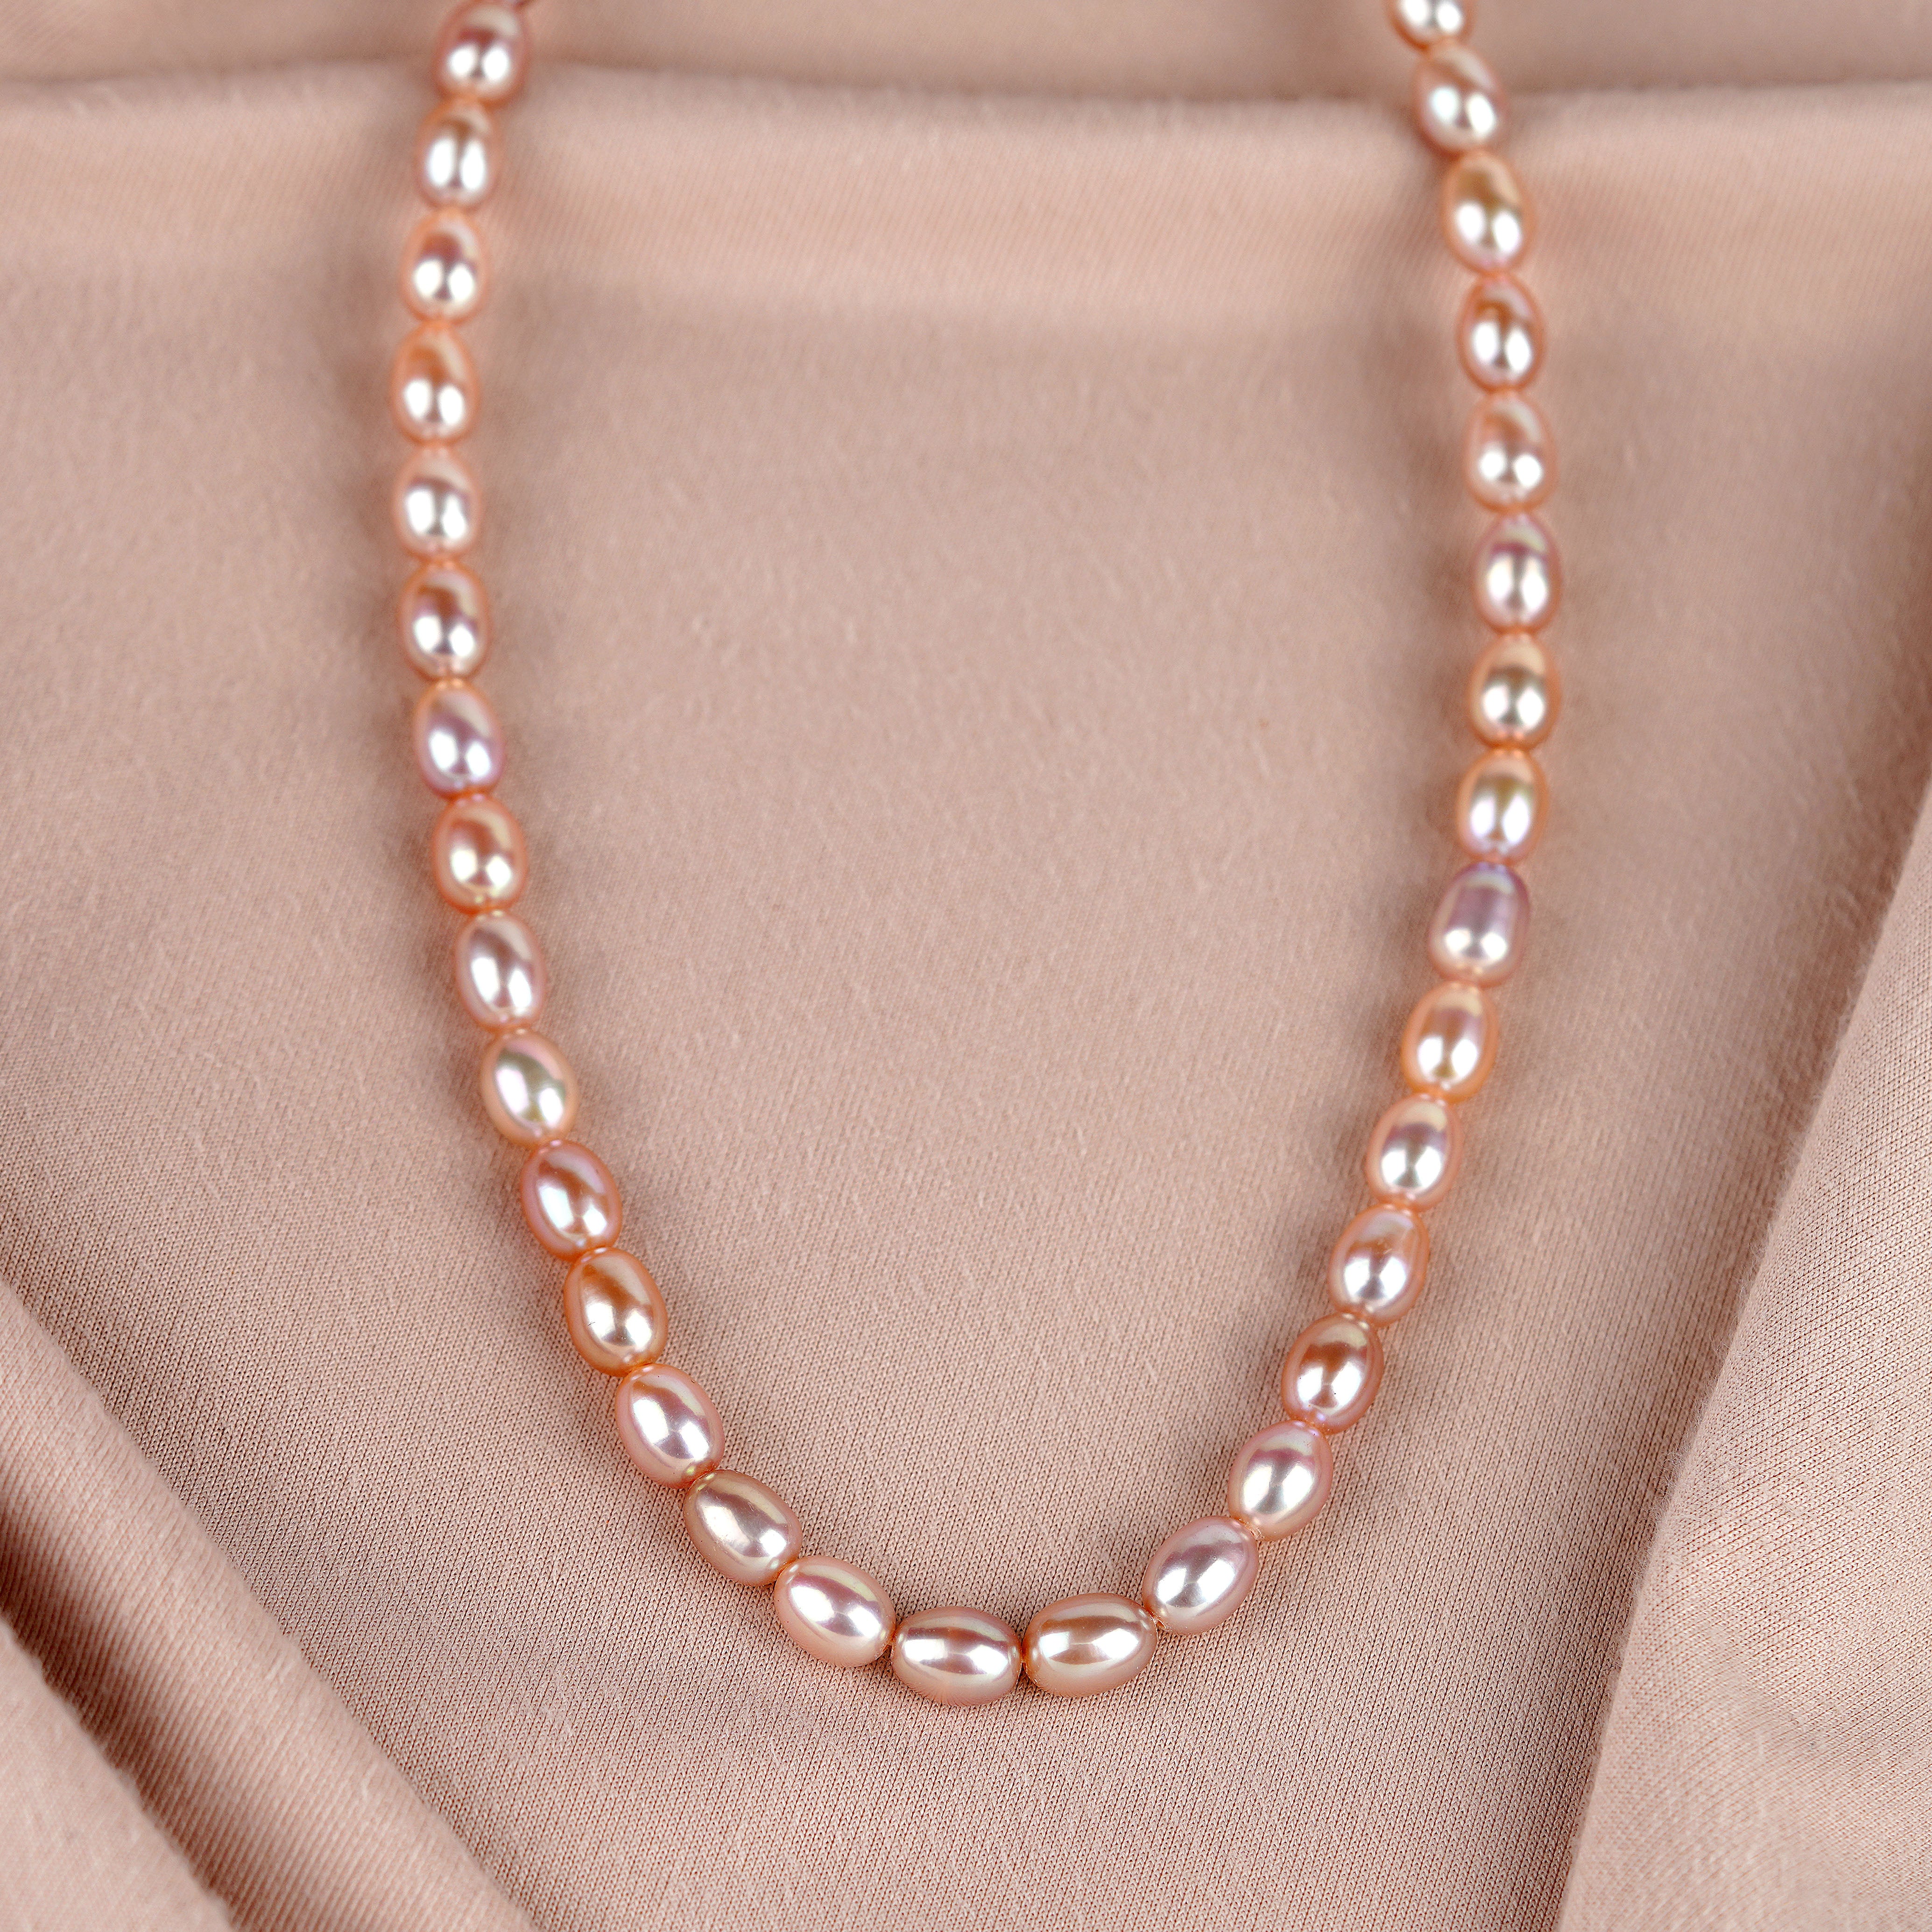 Single Line Pearl Necklace in Peach Blossom